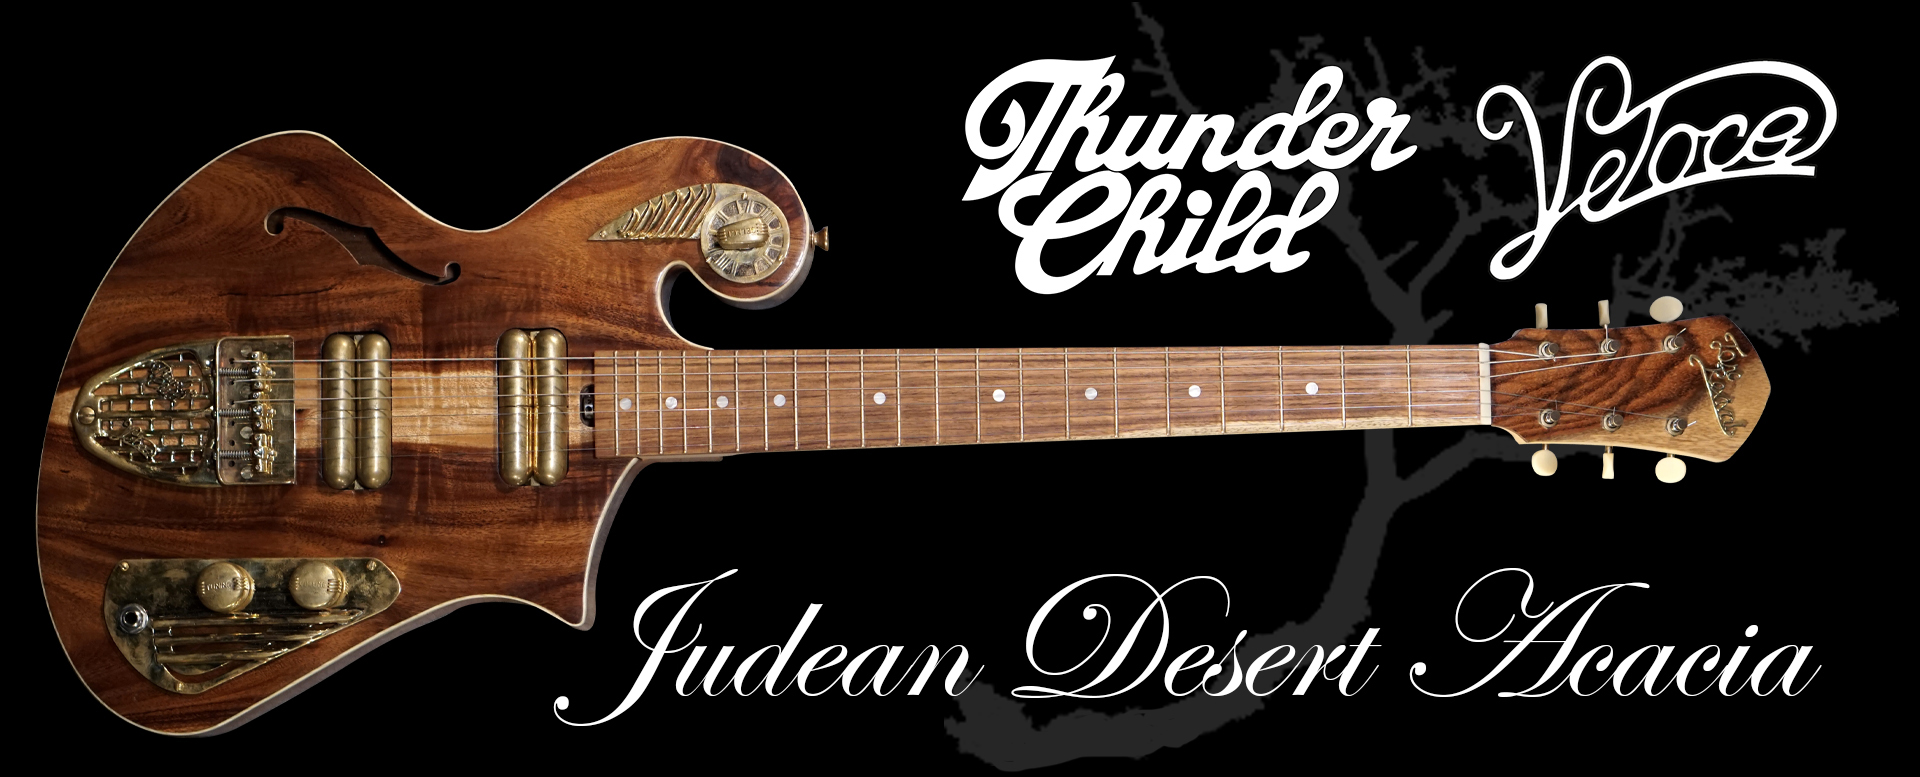 Handmade Guitar Made From Judean Desert Acacia - Thunder Child boutique guitar by Tone Revival Guitars